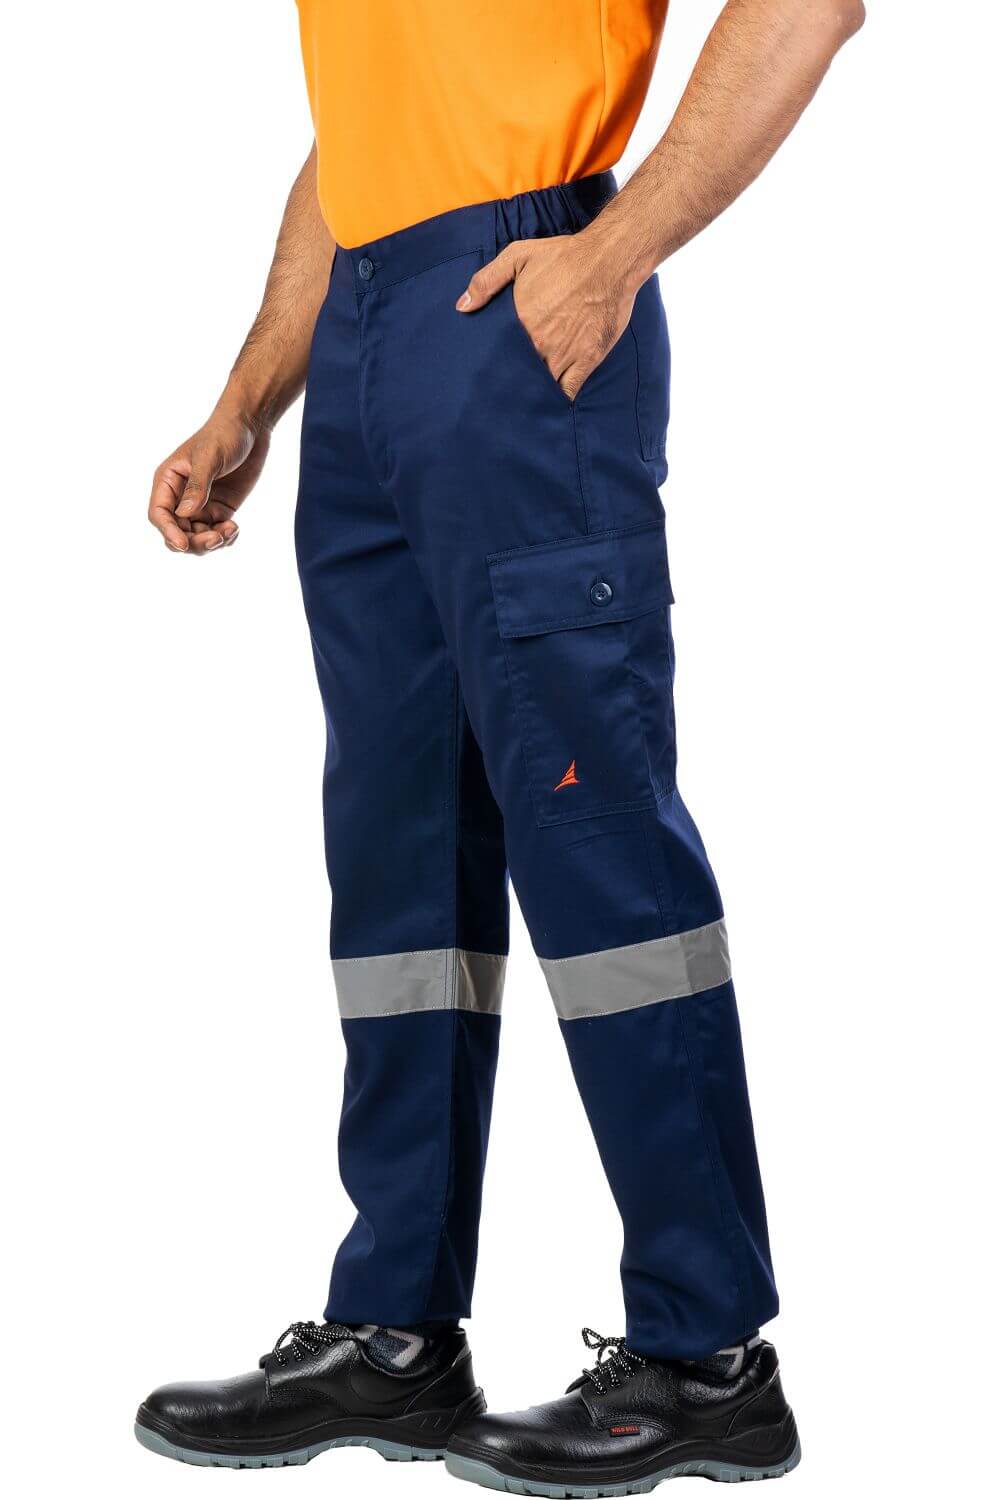 Men's Red Kap Cargo Industrial Pants | Red kap, Khaki pants men, Pants